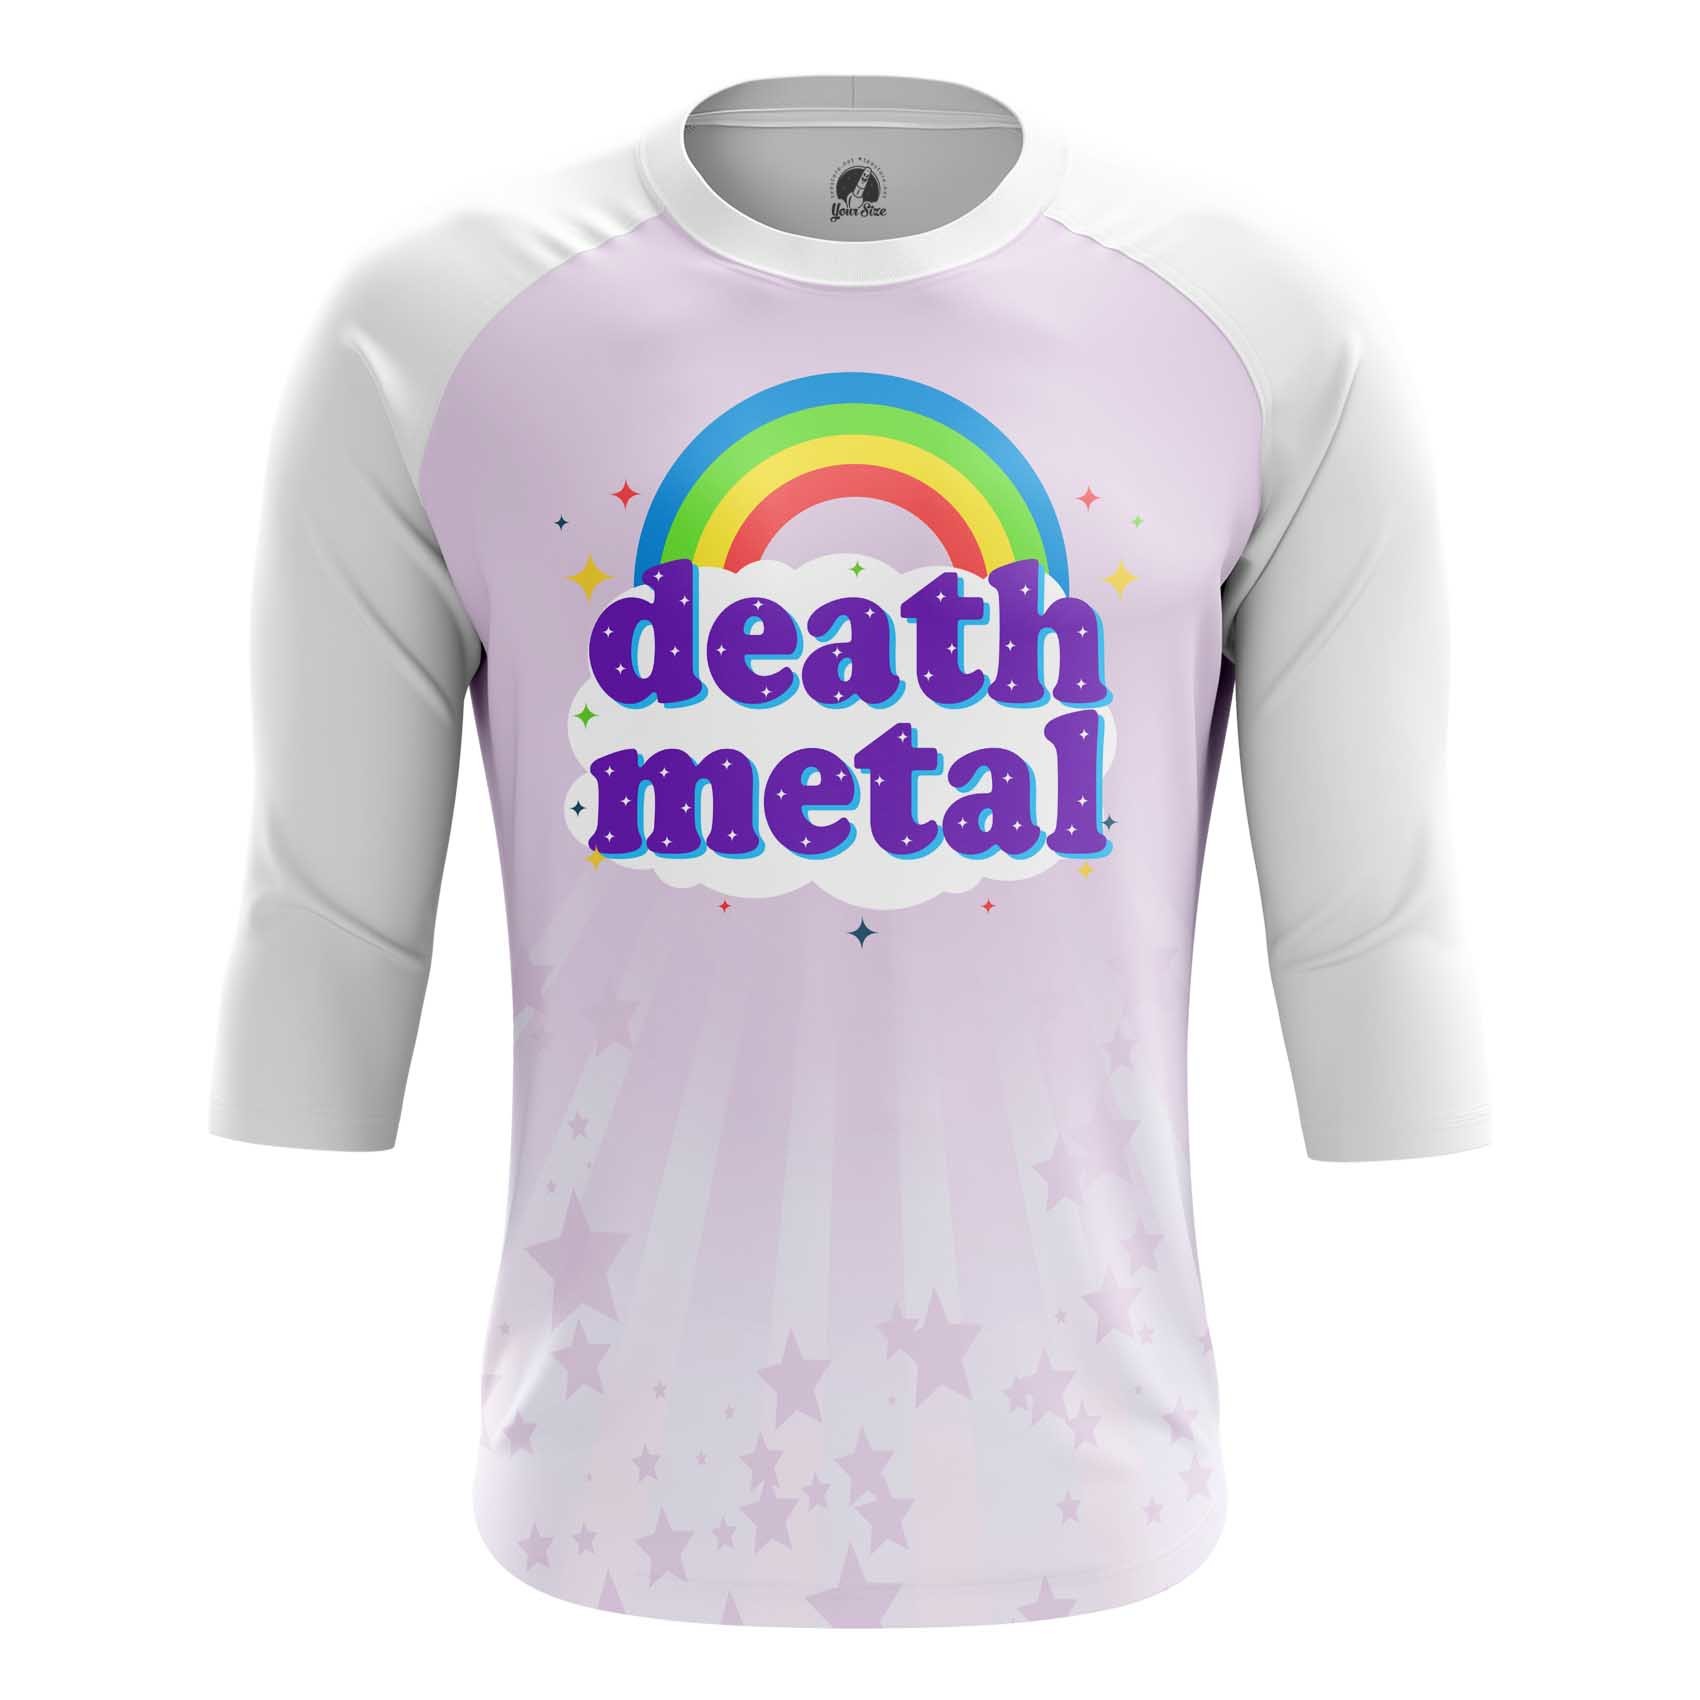 Collectibles Men'S T-Shirt Death Metal Internet Rainbow Music Fun